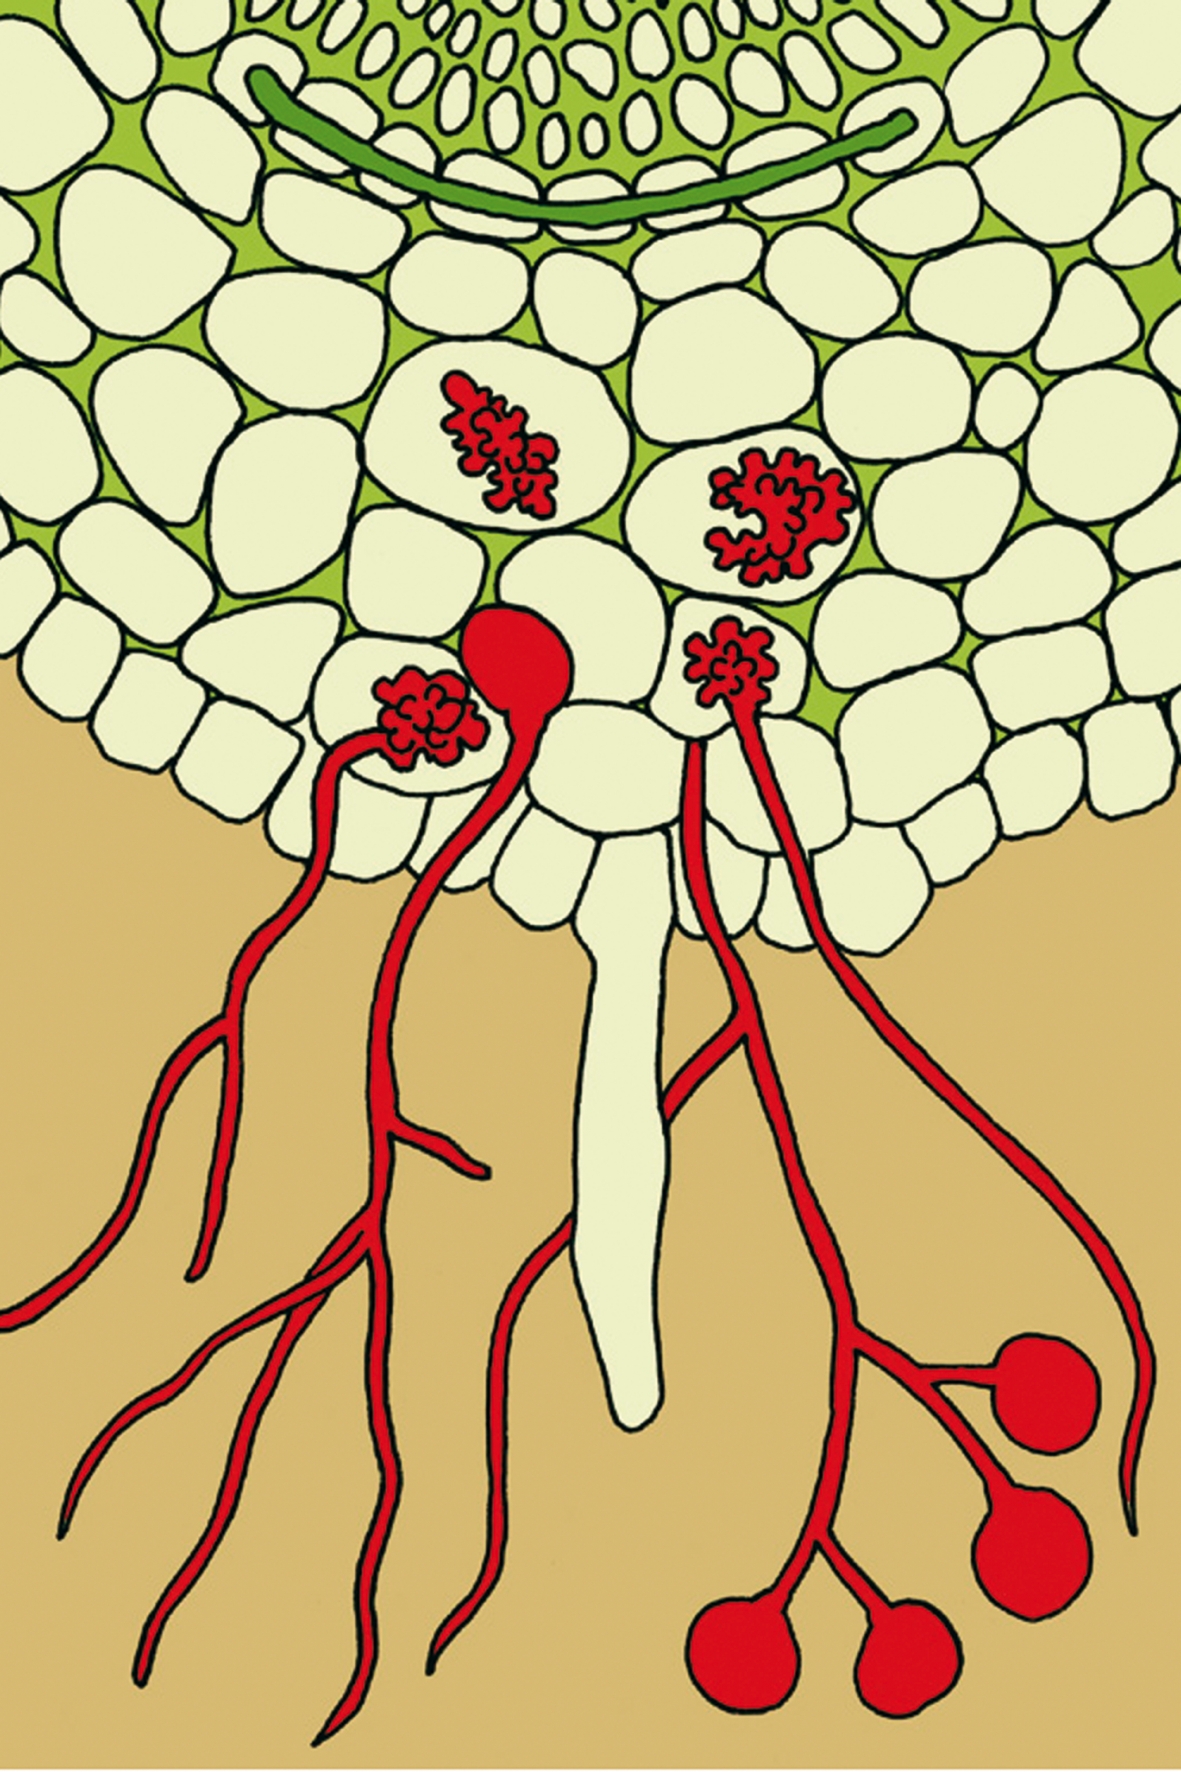 Mykorrhiza